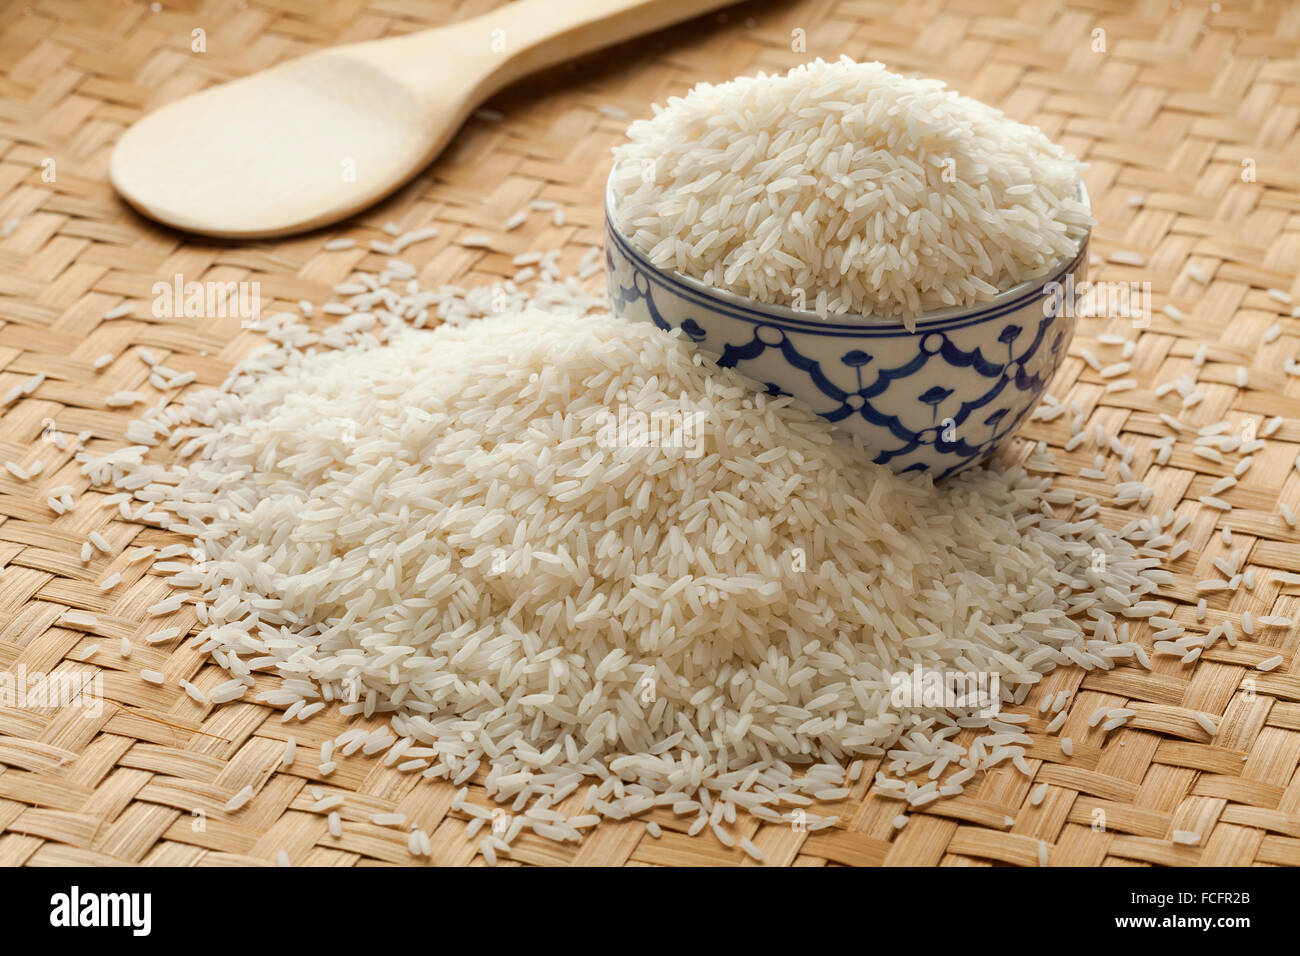 Bowl with uncooked white Jasmine rice Stock Photo